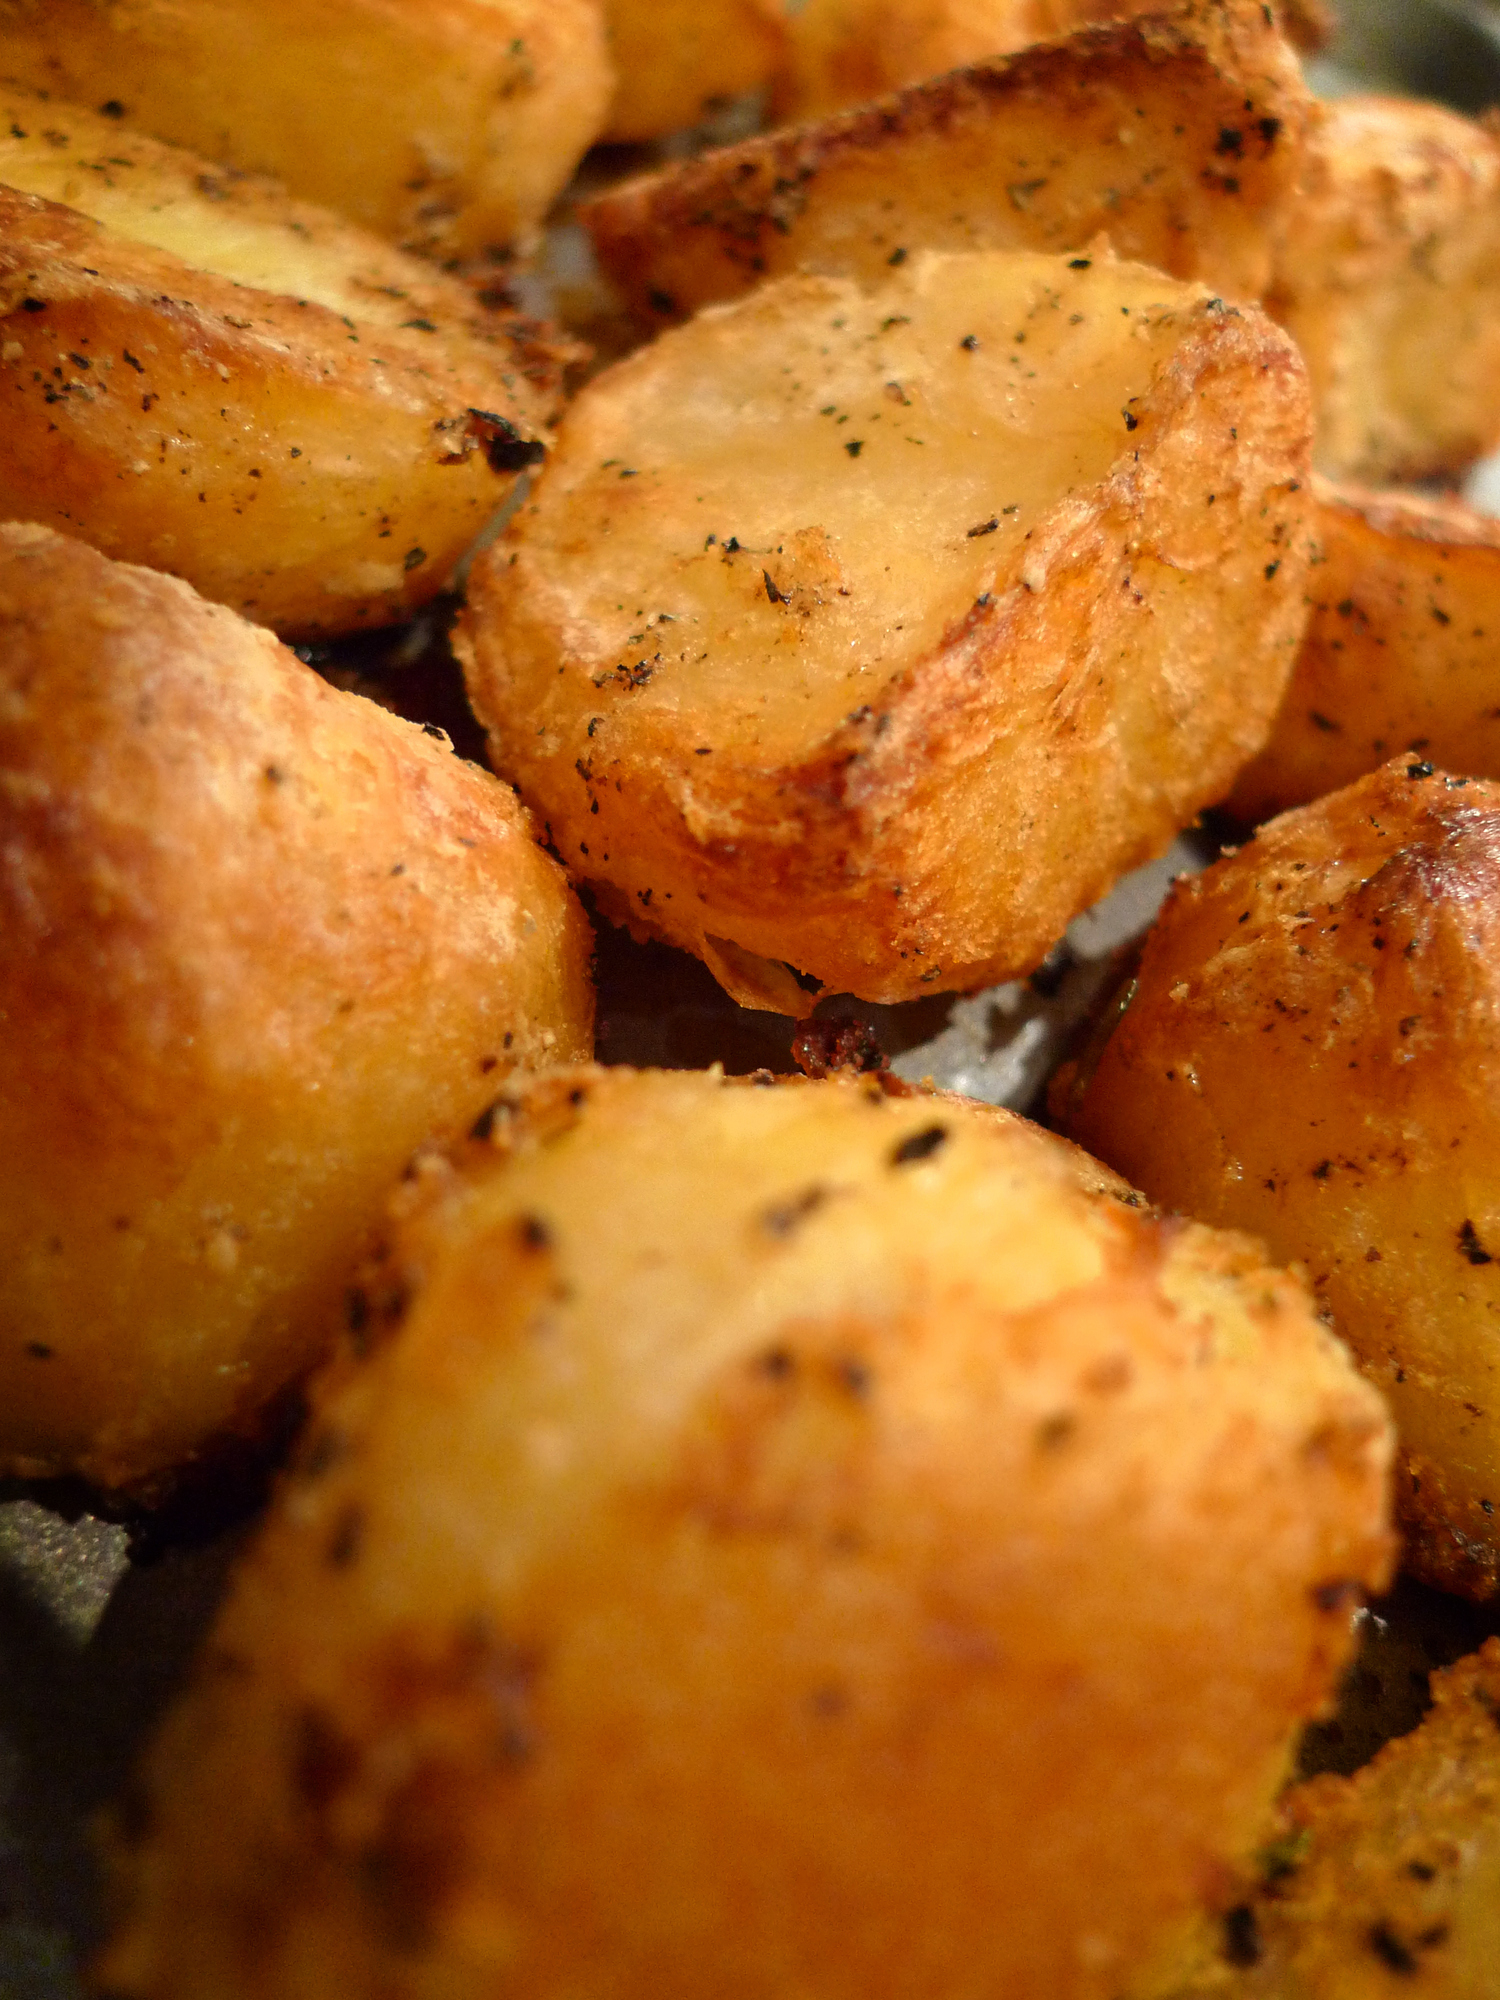 Close-up of seasoned roasted potatoes